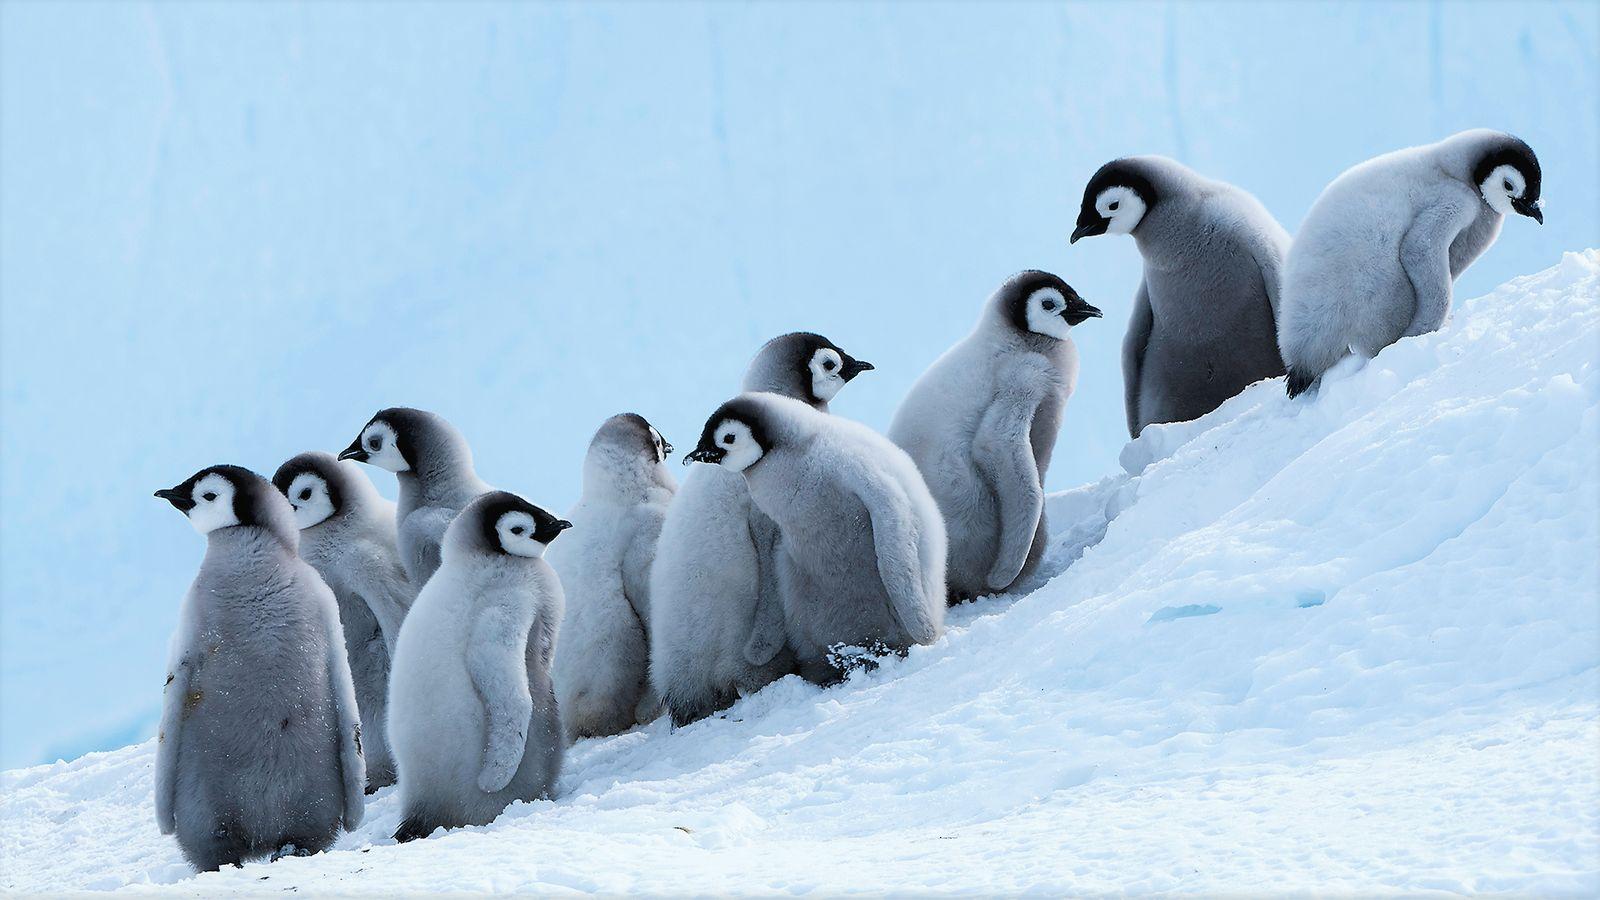 Adorable Baby Penguins in Snow Wallpaper